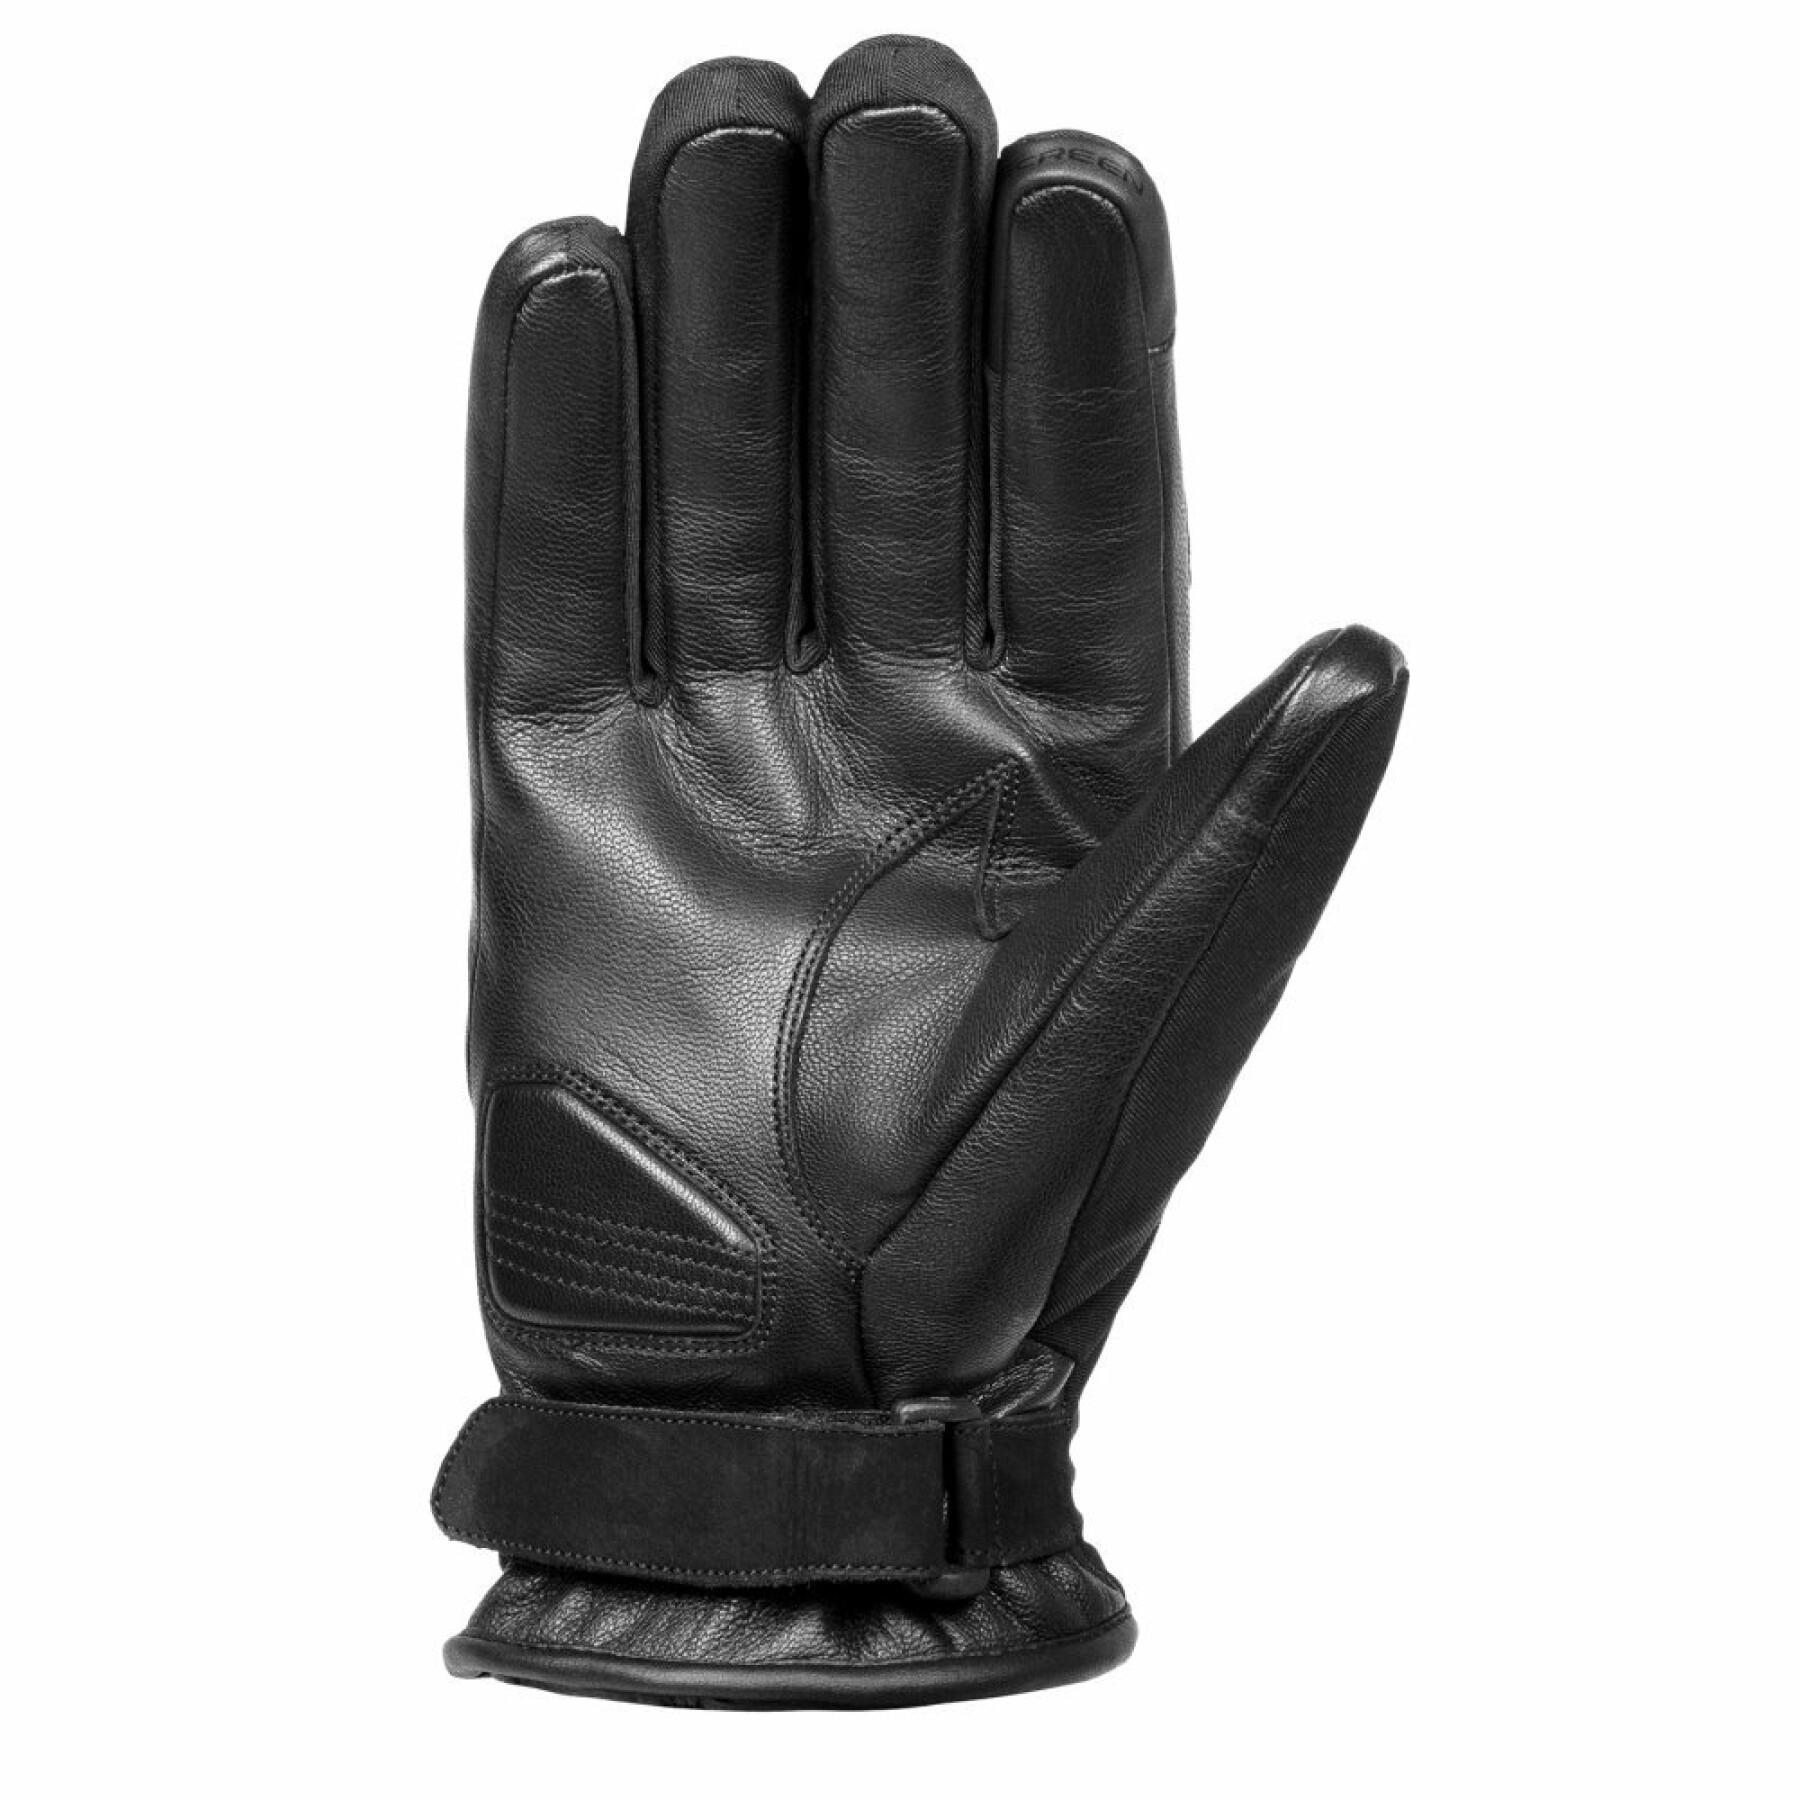 Winter motorcycle gloves Ixon Pro Fryo